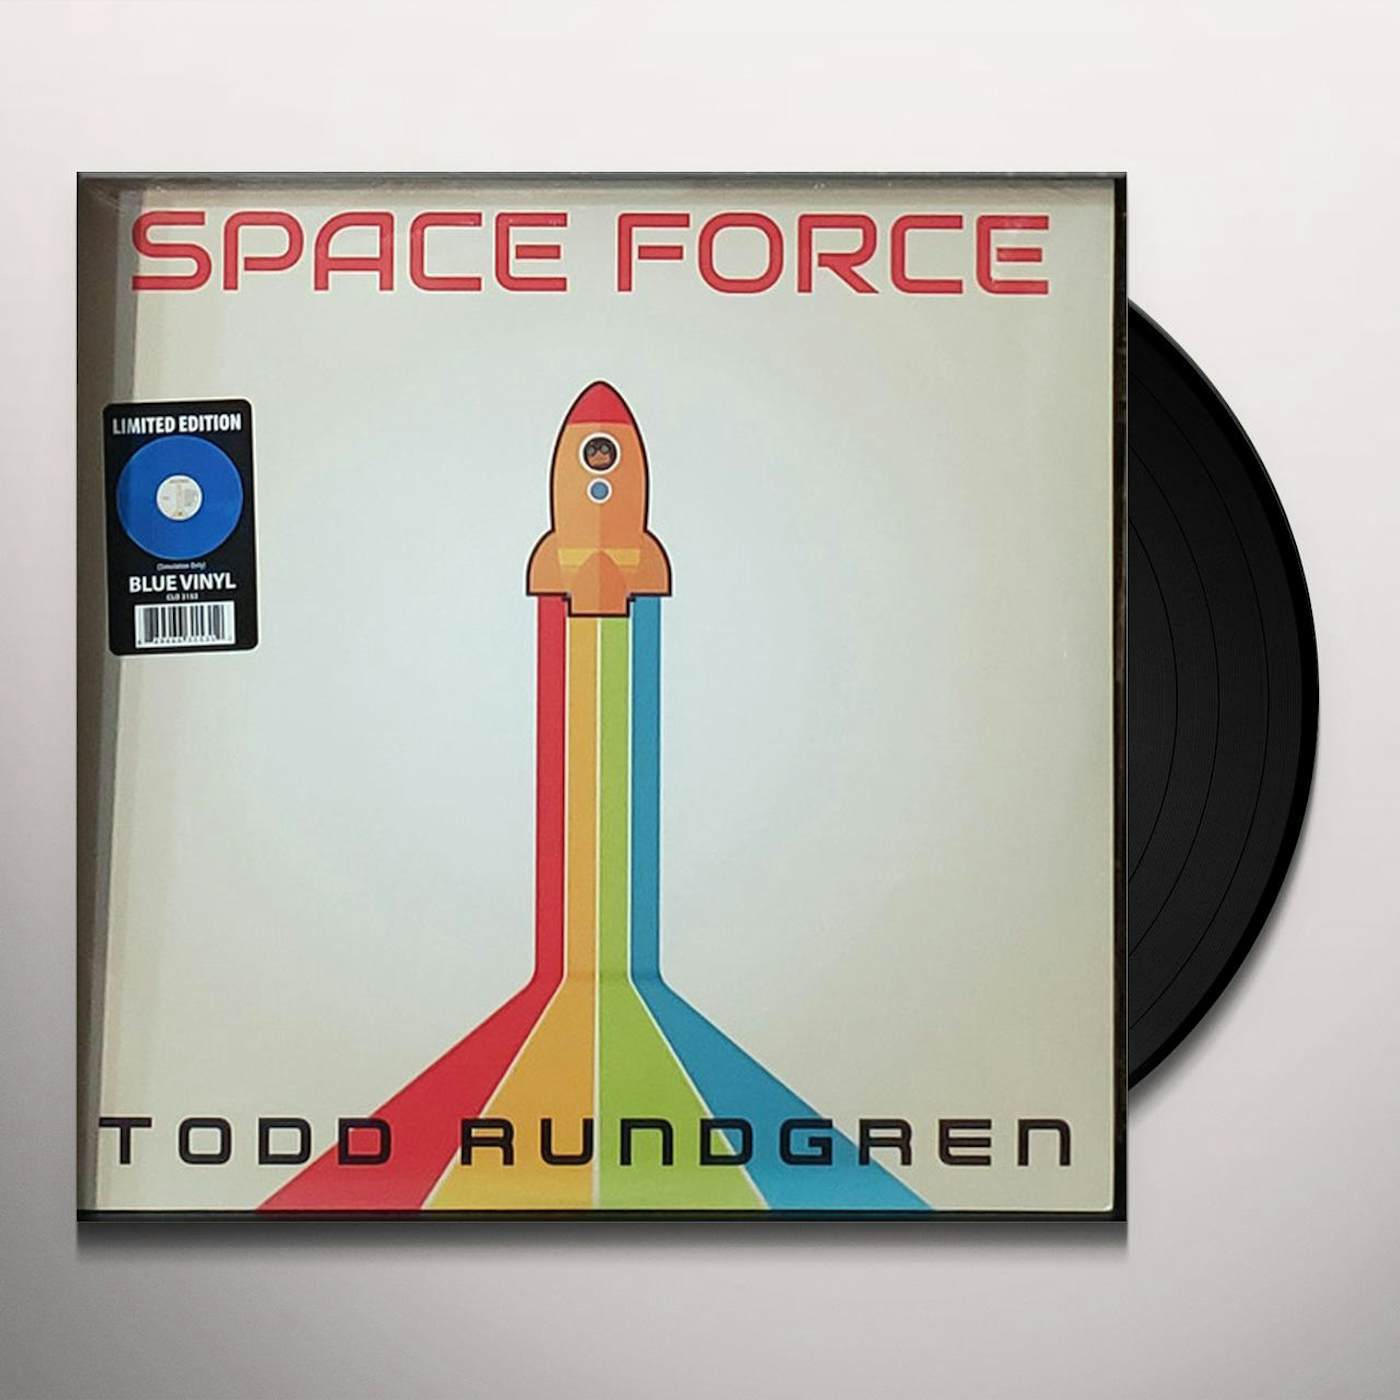 Todd Rundgren SPACE FORCE (BLUE VINYL) Vinyl Record